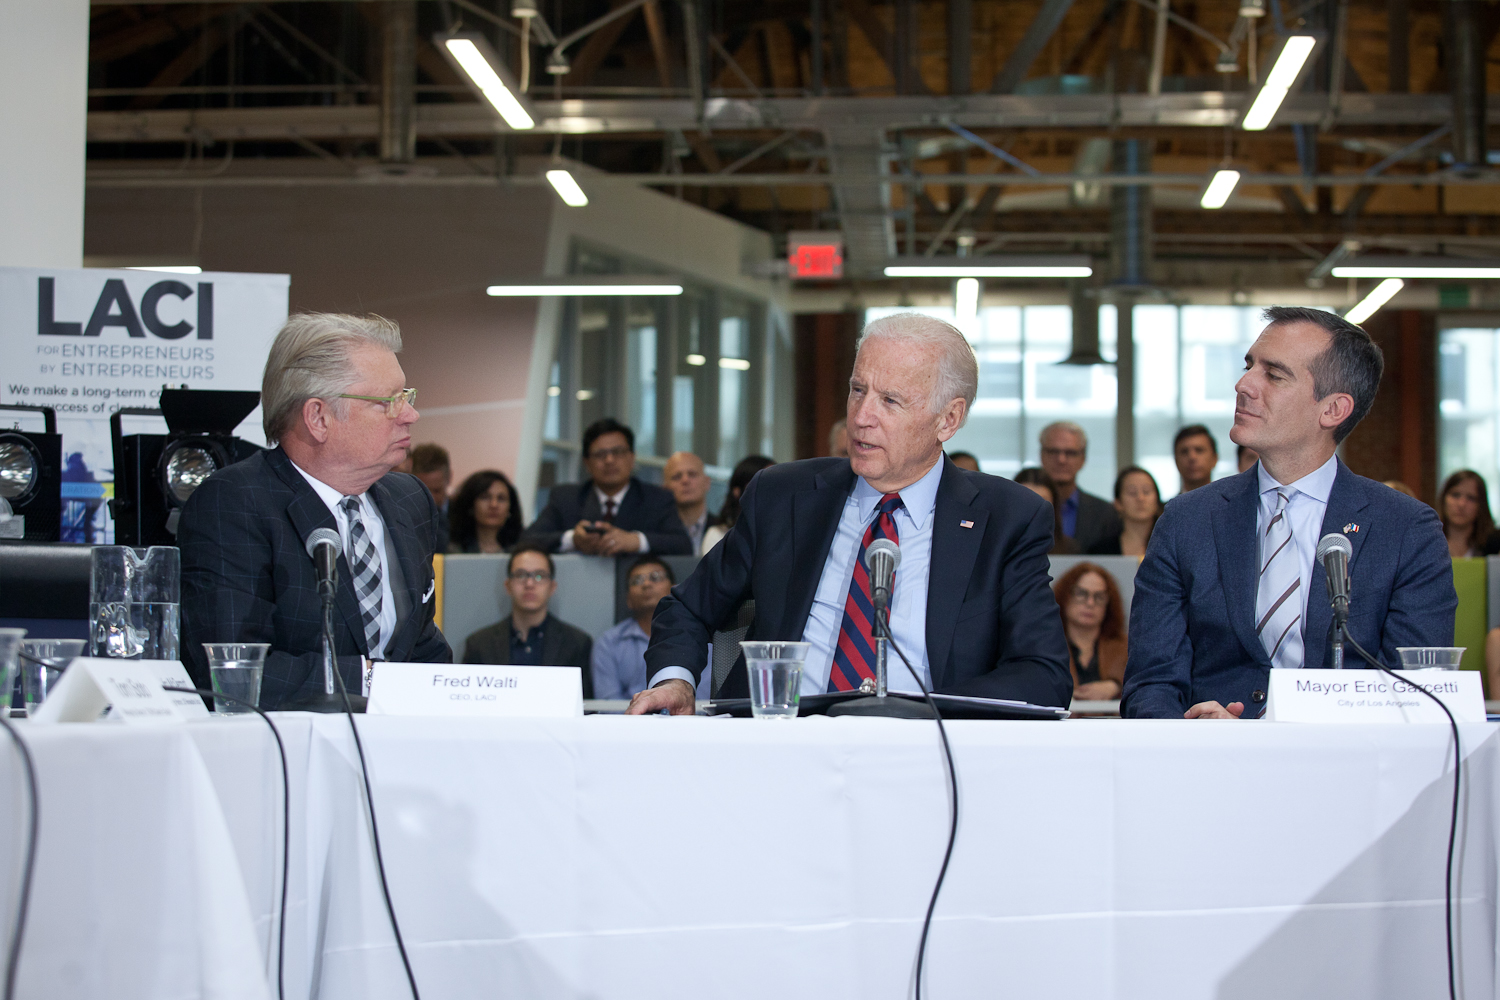 LACI CEO Fred Walti and VP Joe Biden.